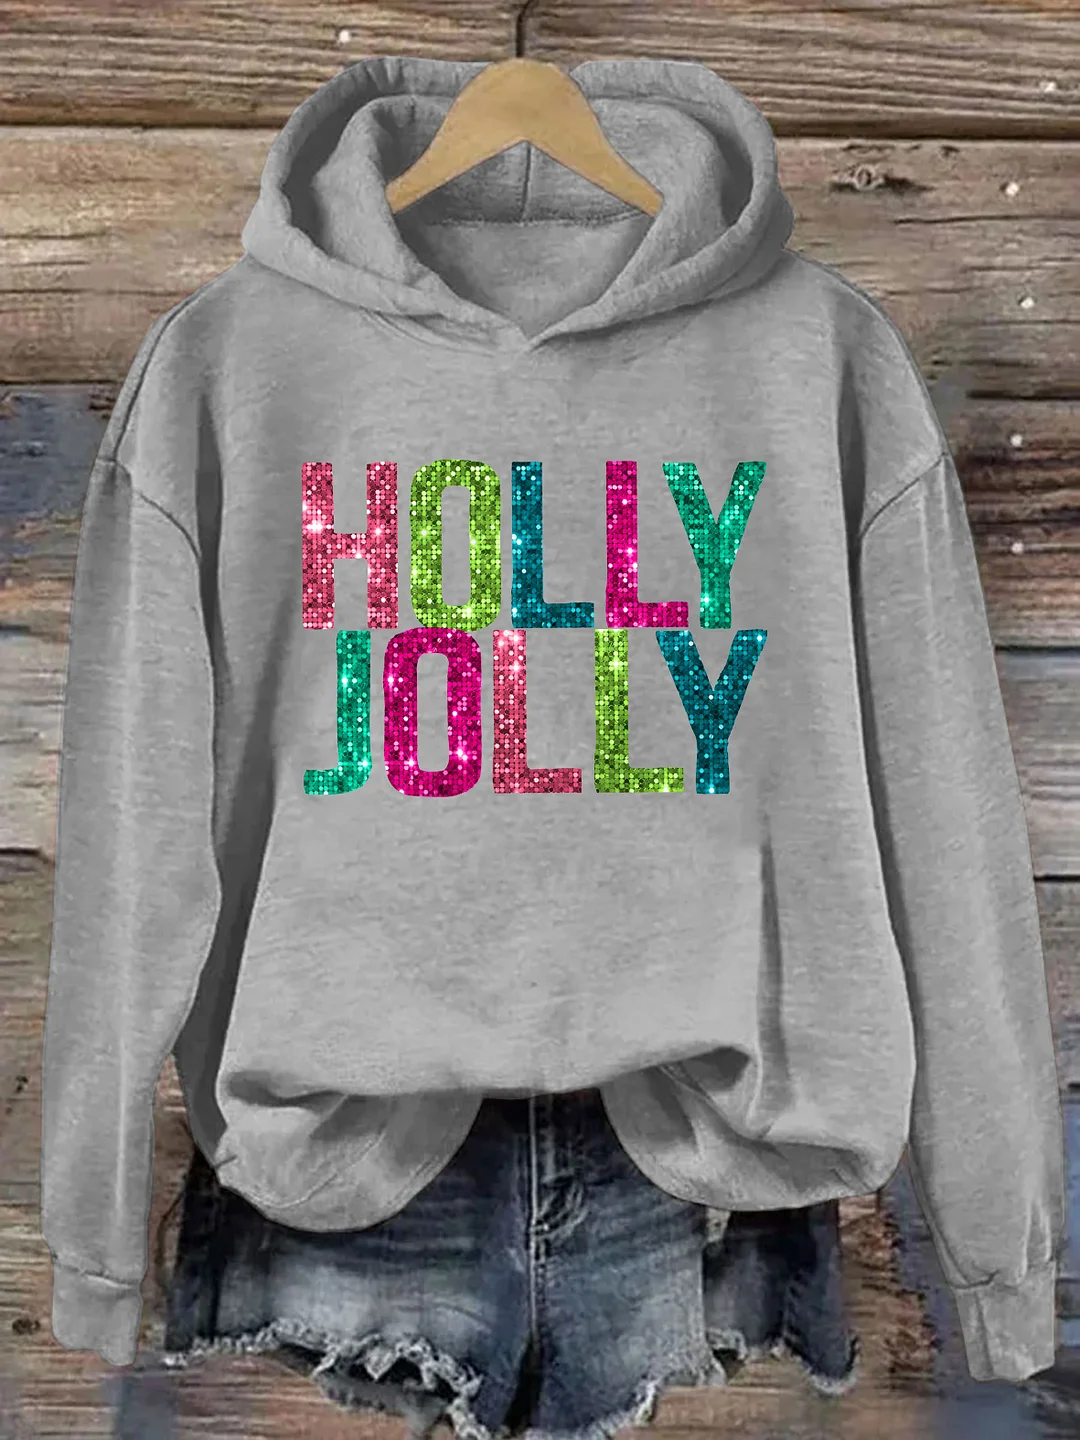 Holly Jolly Hoodie